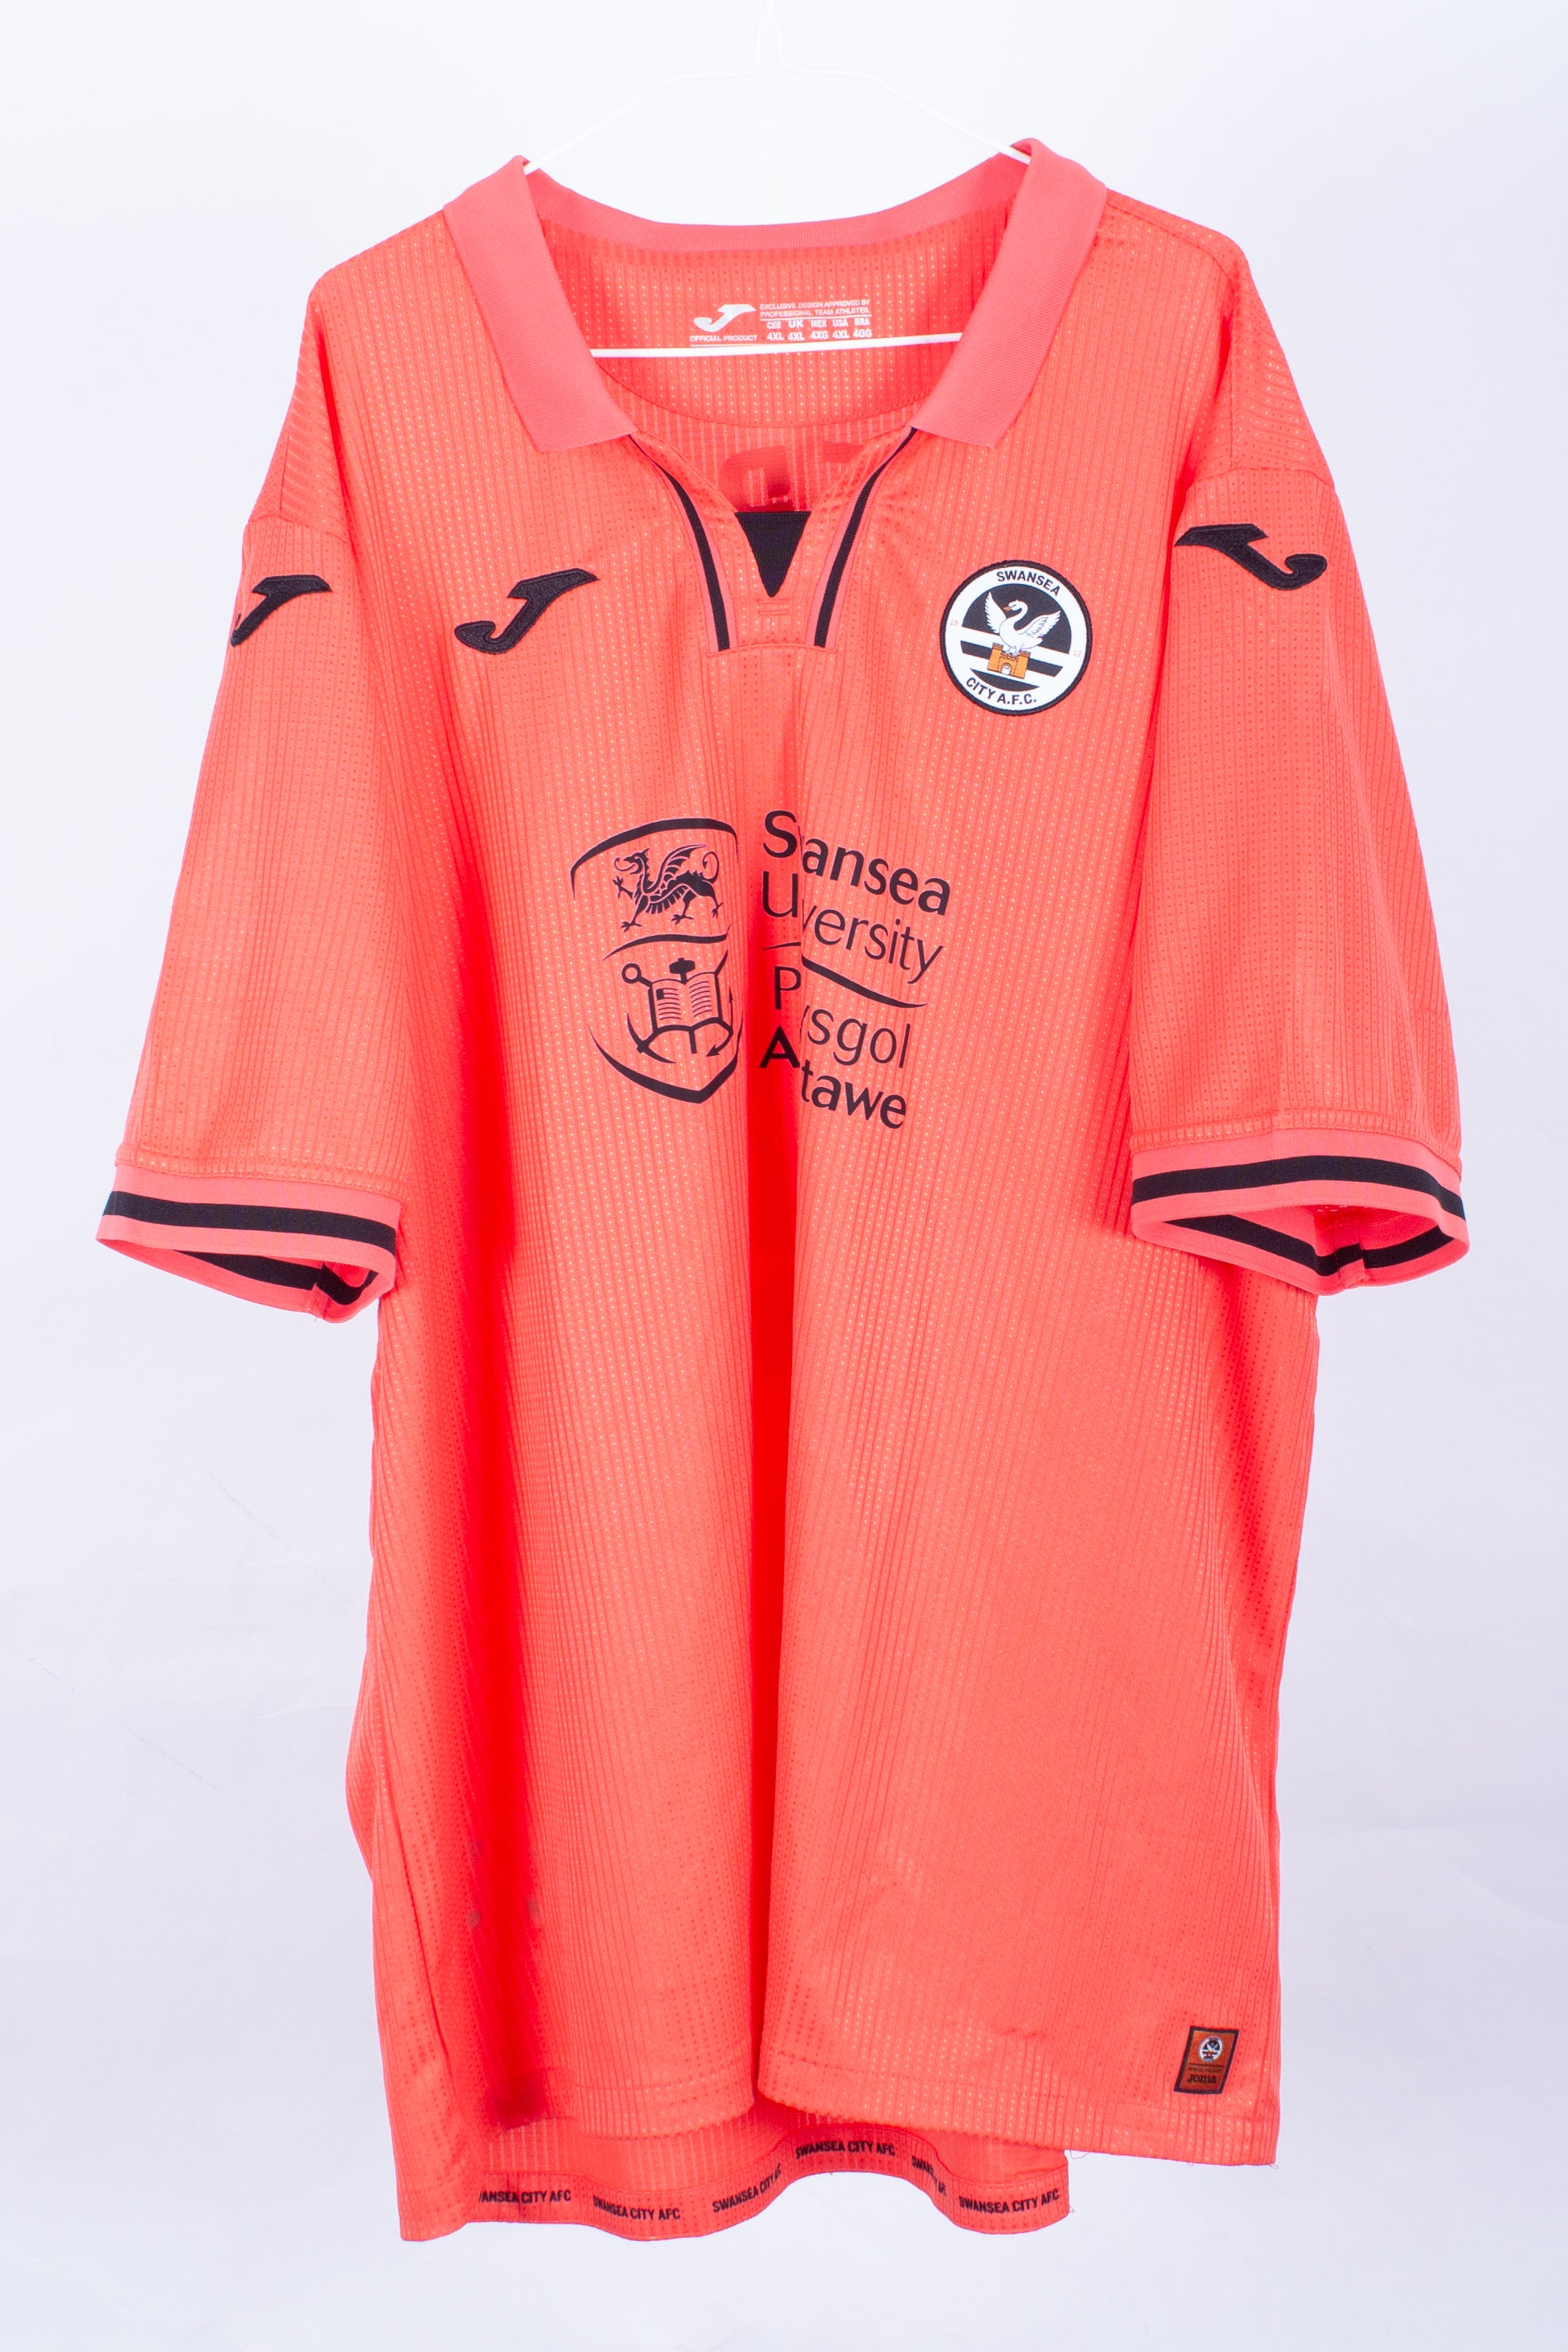 Swansea 2020/21 Away Shirt (Paterson #12)